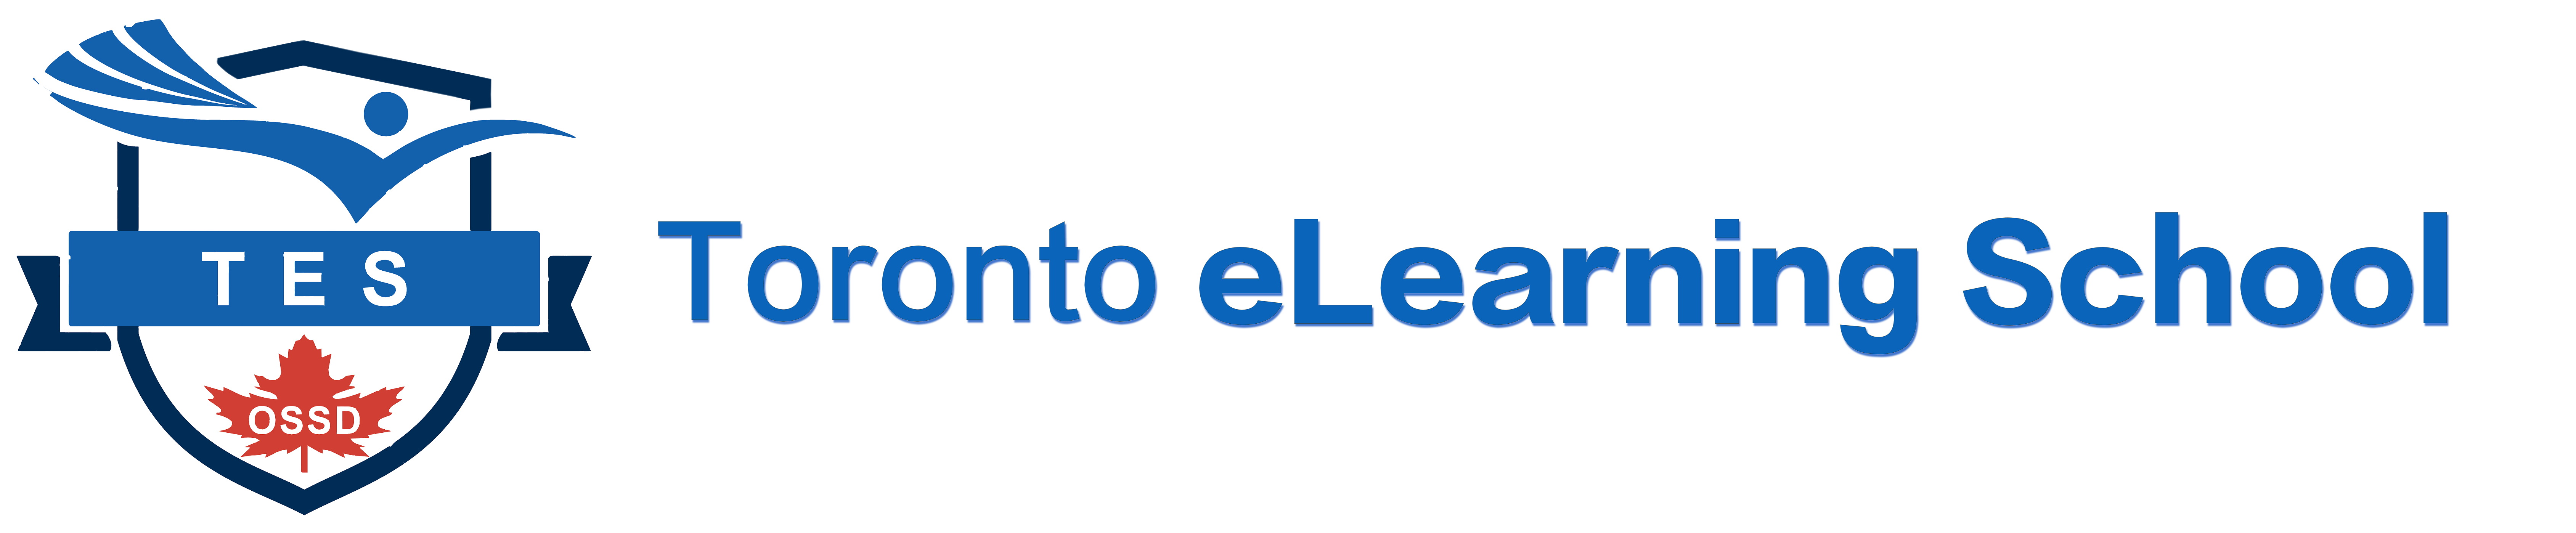 Toronto eLearning School - Canada's Premier Online High School